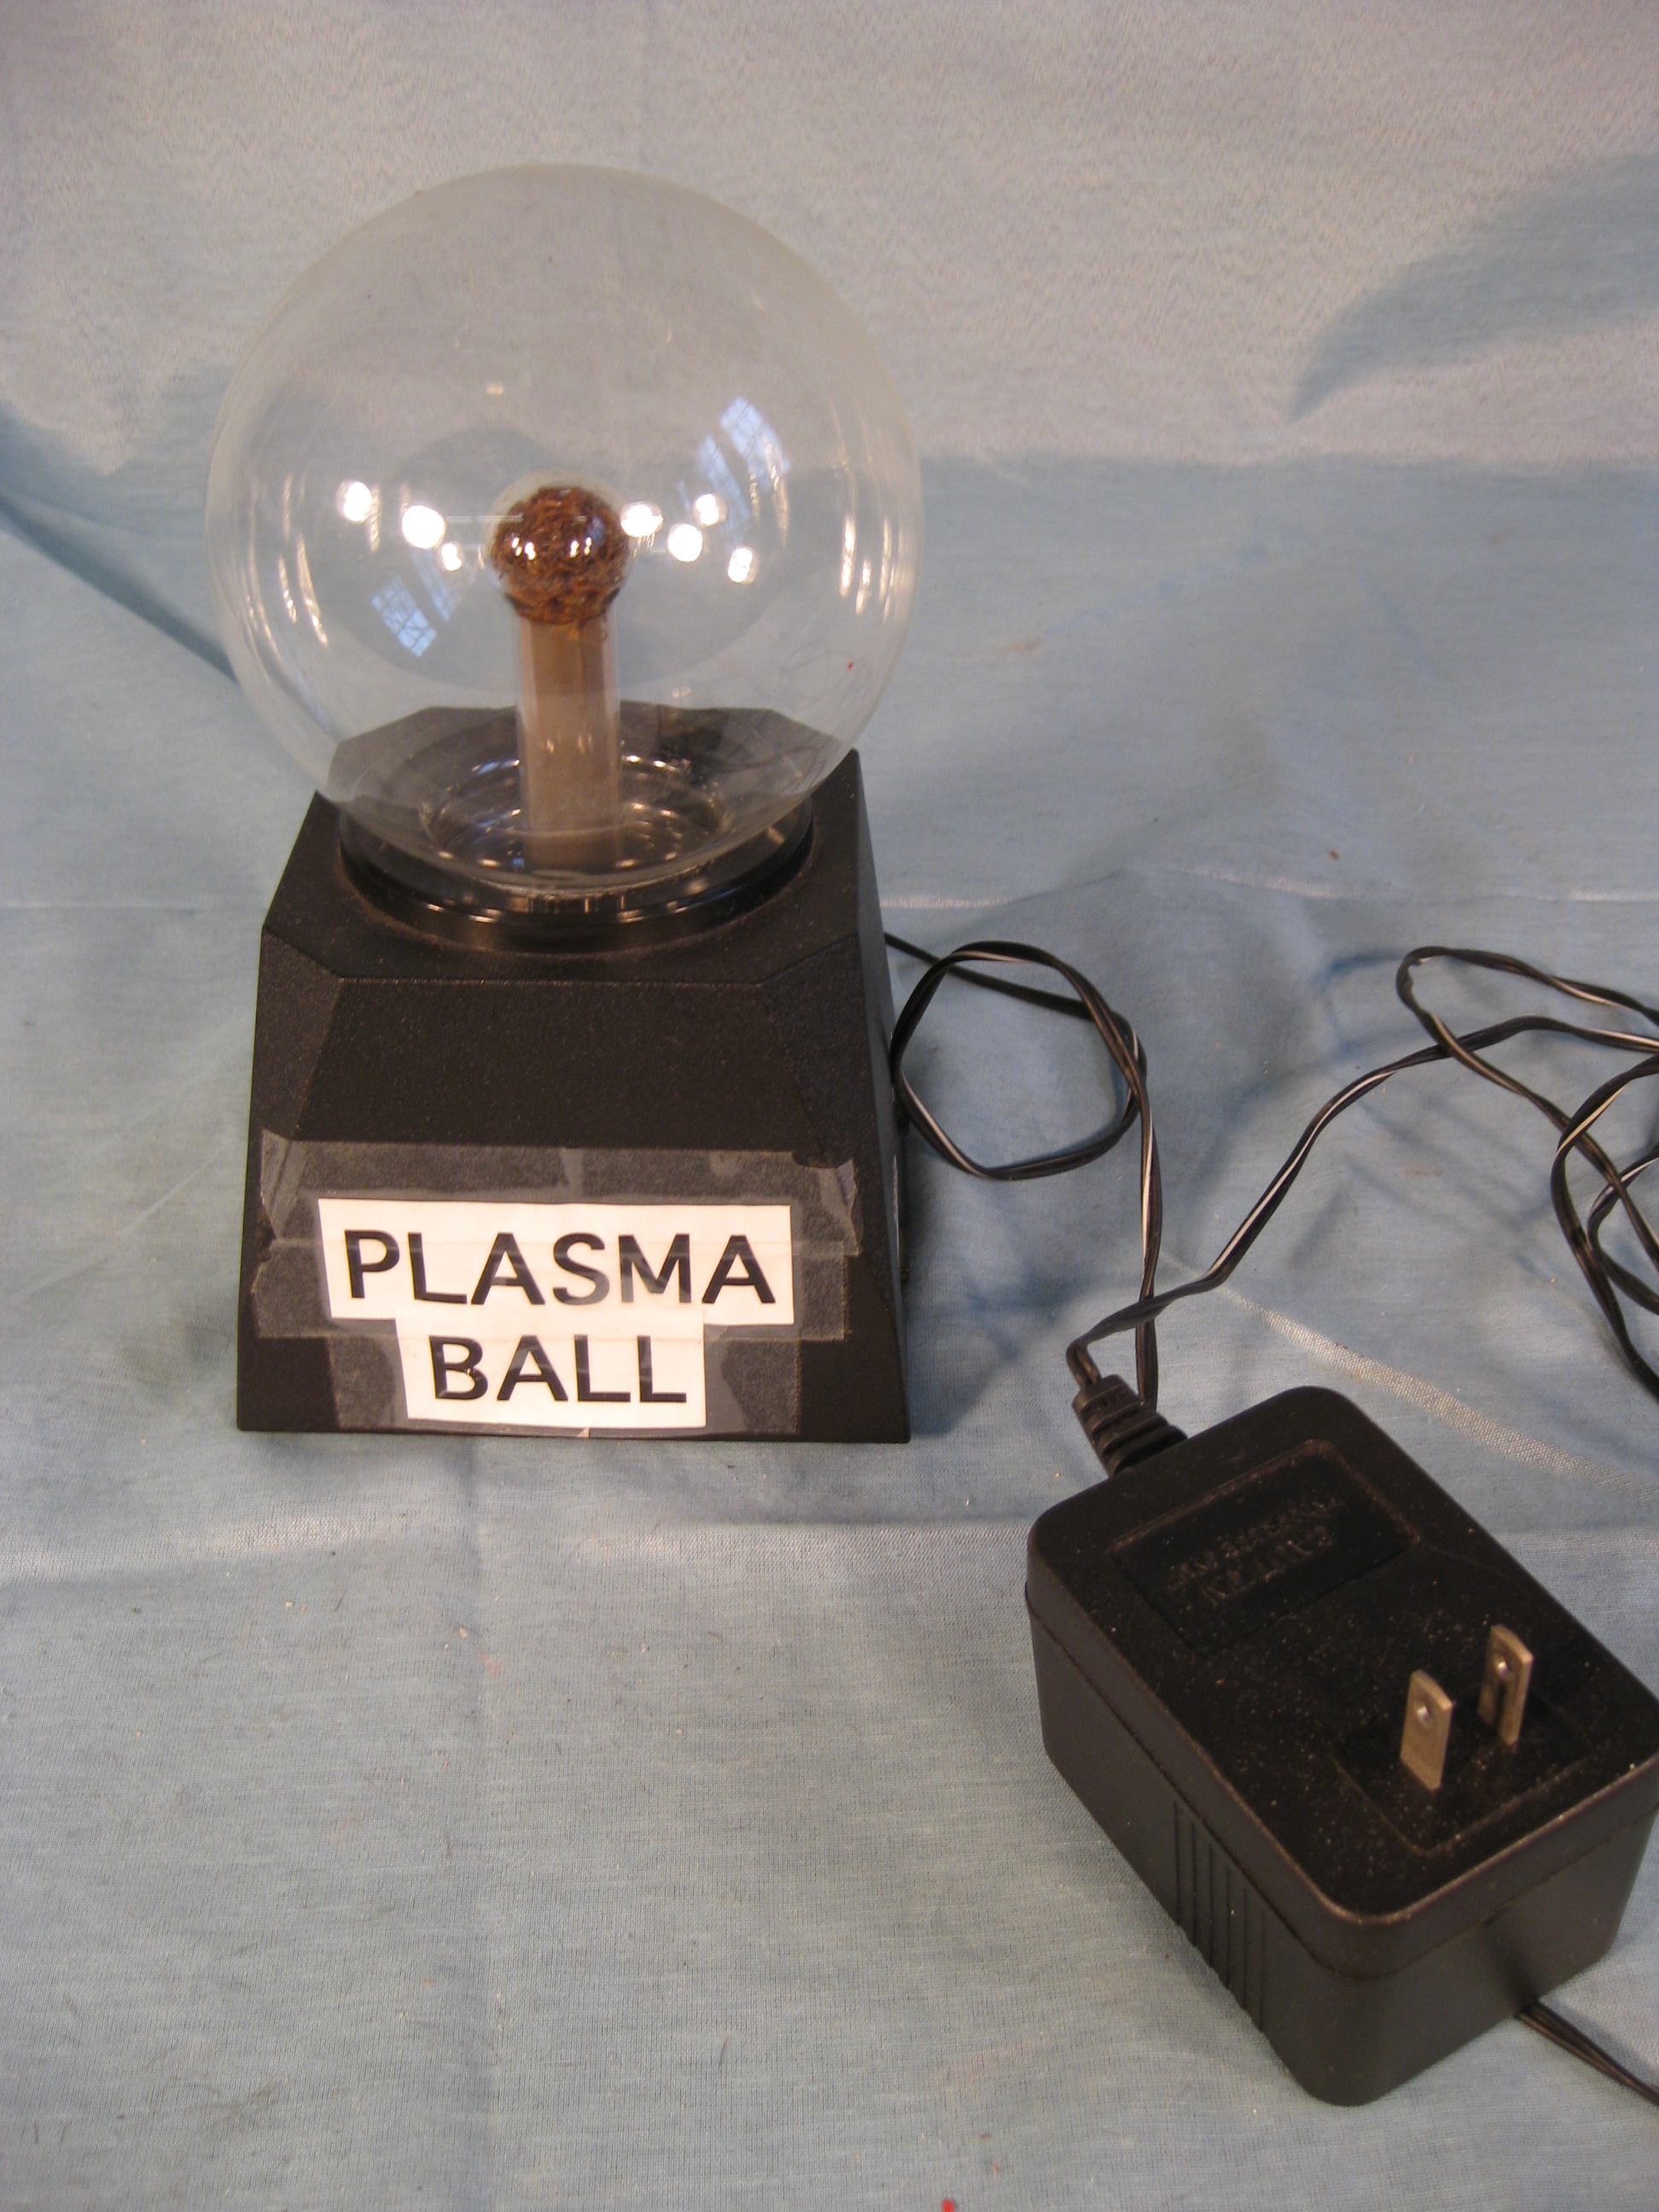 Plasma ball. 1